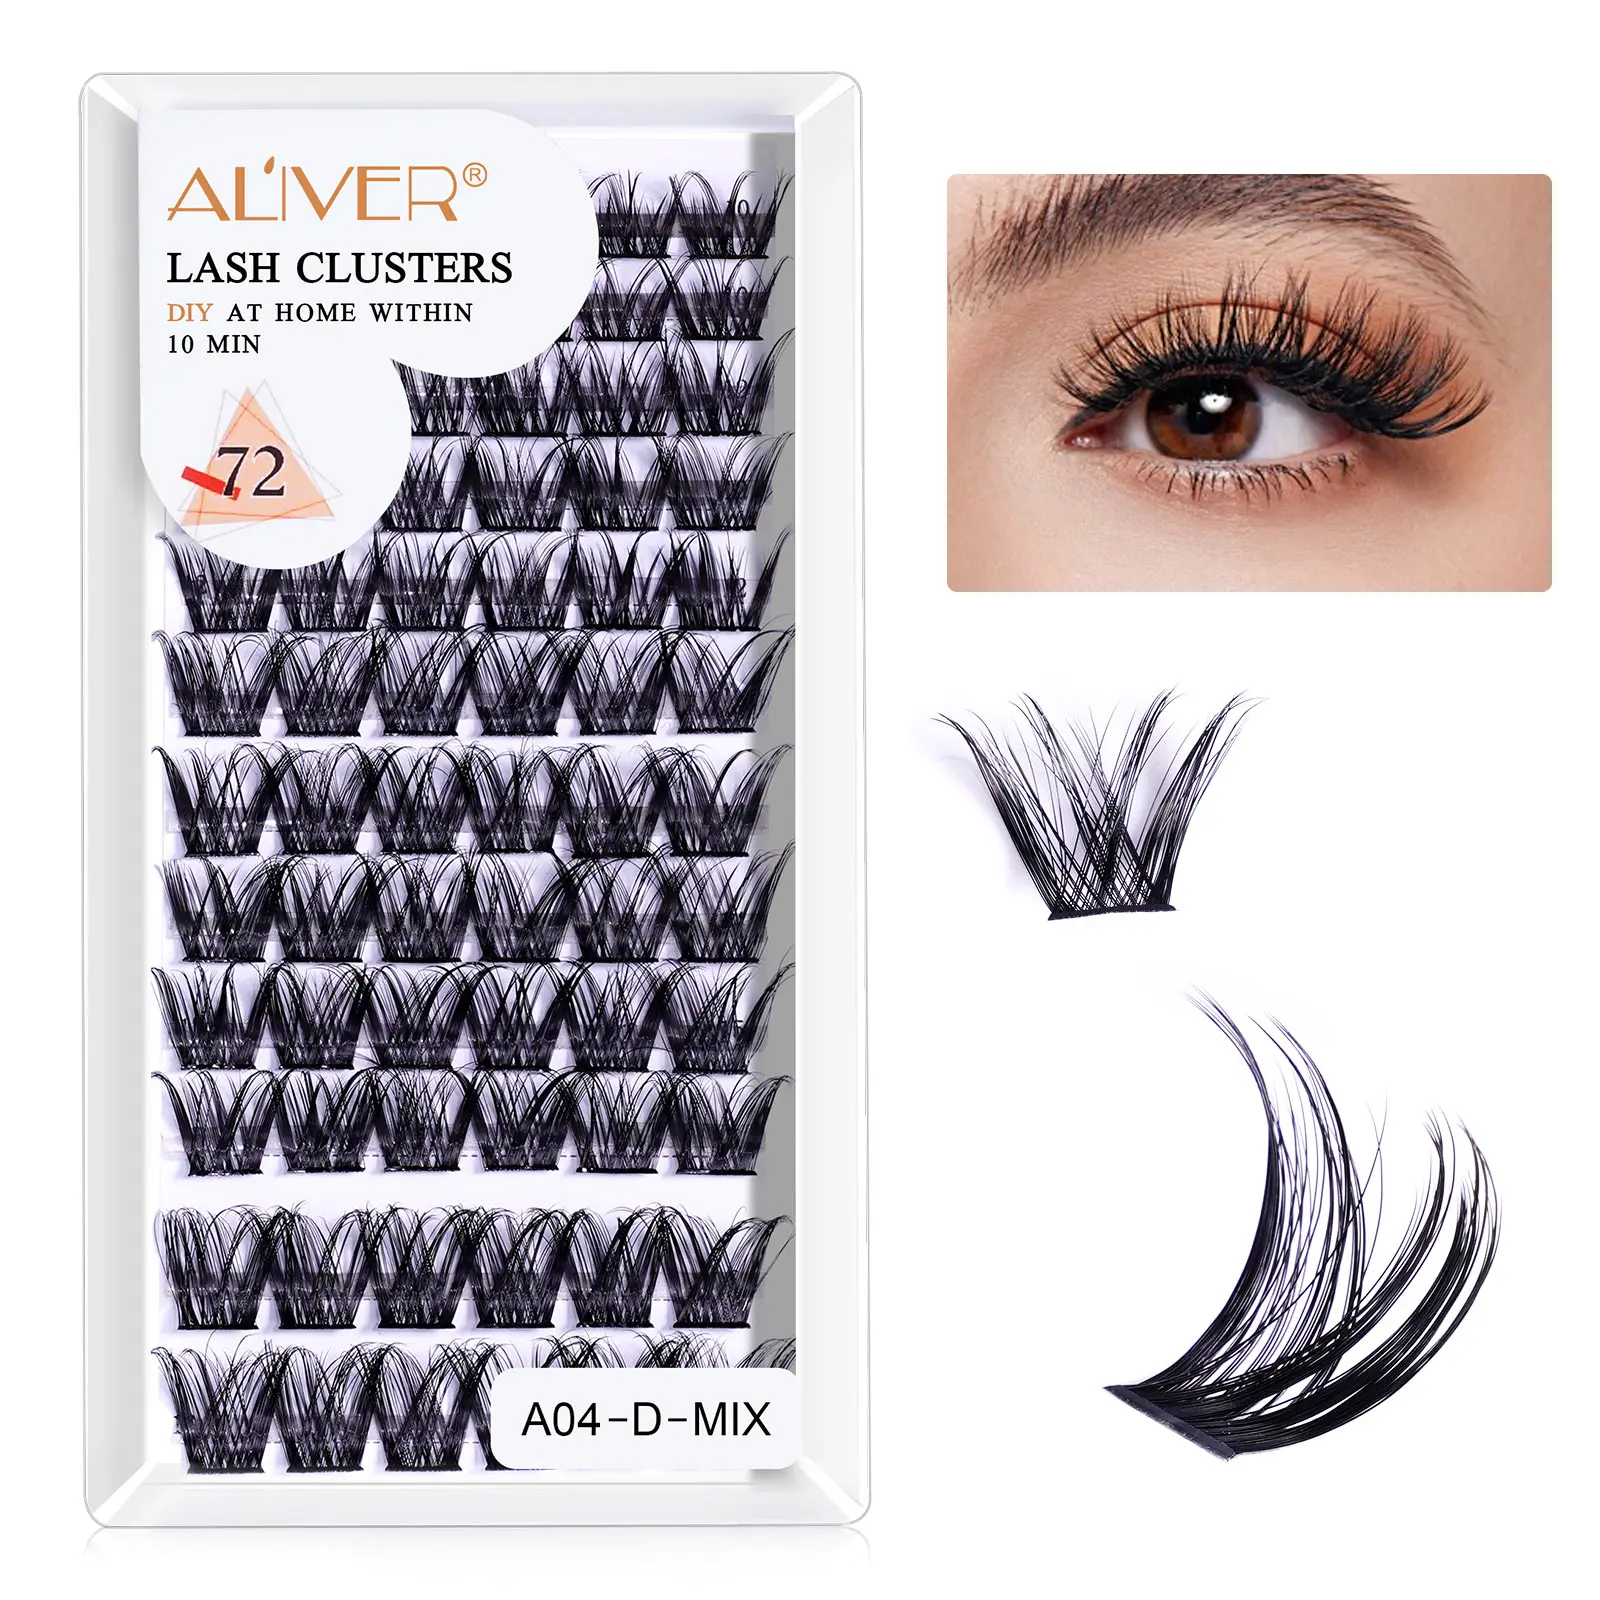 

Natural Look Mix 10-16Mm False Eyelashes DIY Wispy Fluffy Cluster Eyelash Extension Individual Lashes Extension Kit Lash Cluster